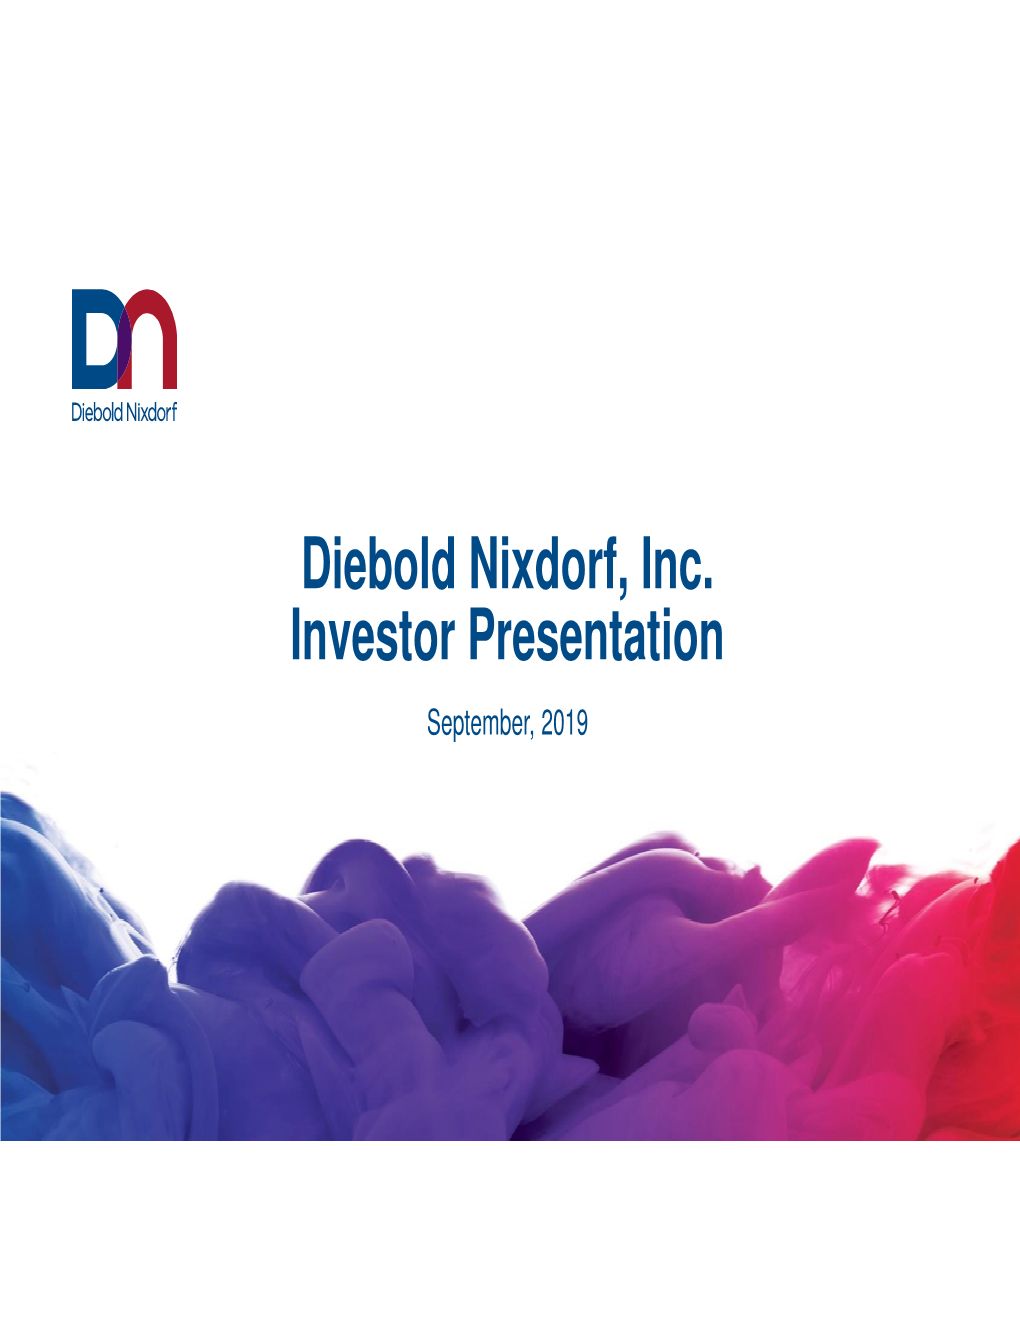 Diebold Nixdorf, Inc. Investor Presentation September, 2019 Use of Non-GAAP Financial Information